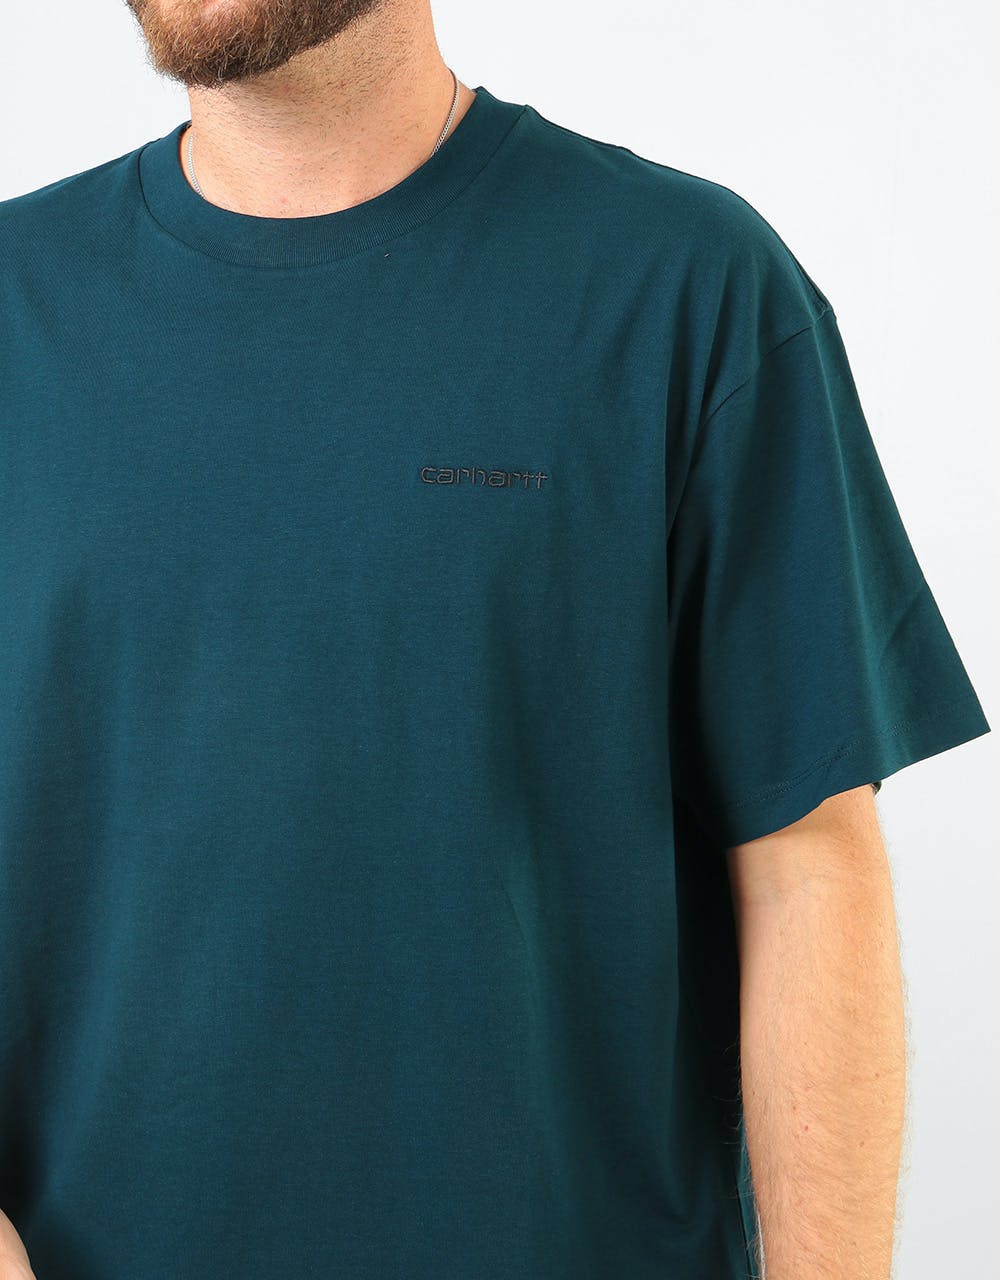 Carhartt WIP S/S Script Embroidery T-Shirt - Duck Blue/Black